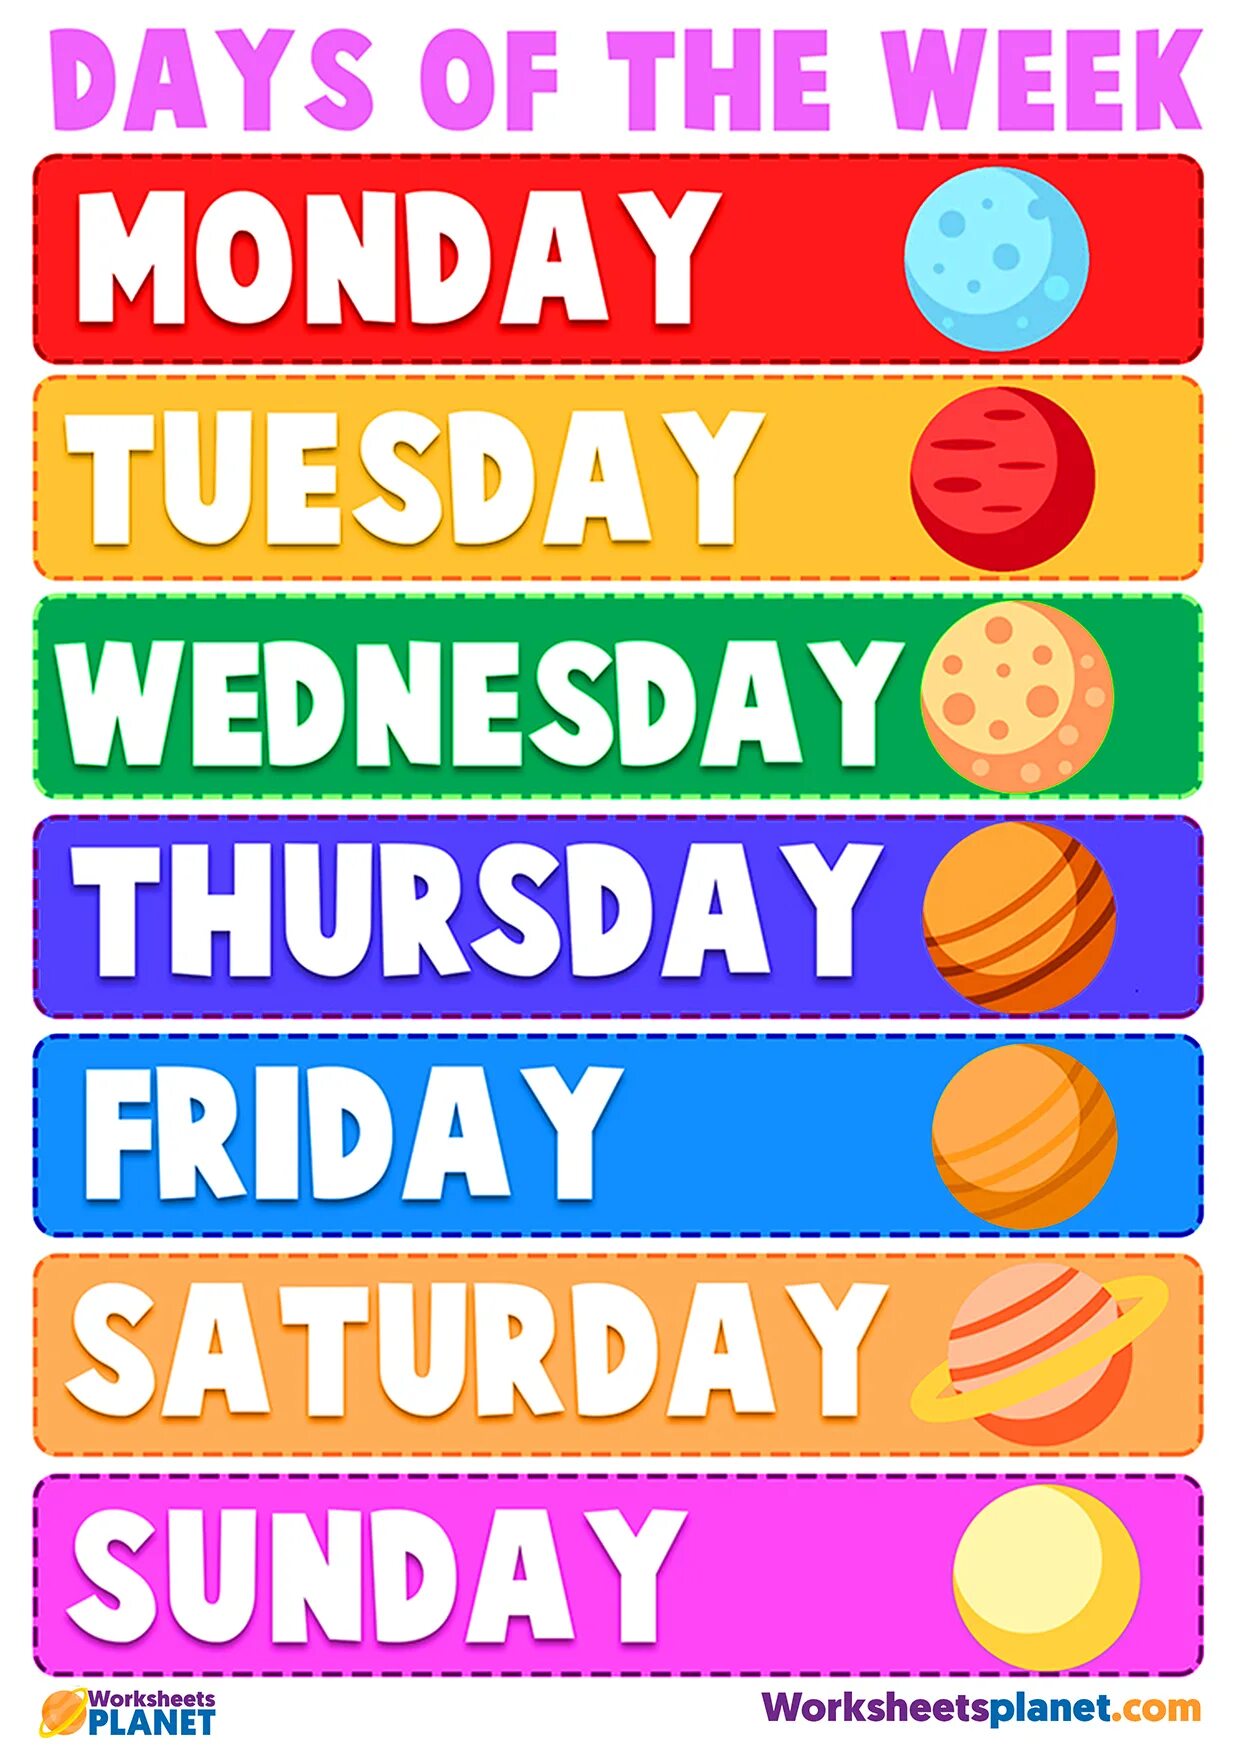 Days of the week. Days of the week плакат. Week Days name. Days of the week Tuesday. Четверг пятница суббота воскресенье на английском